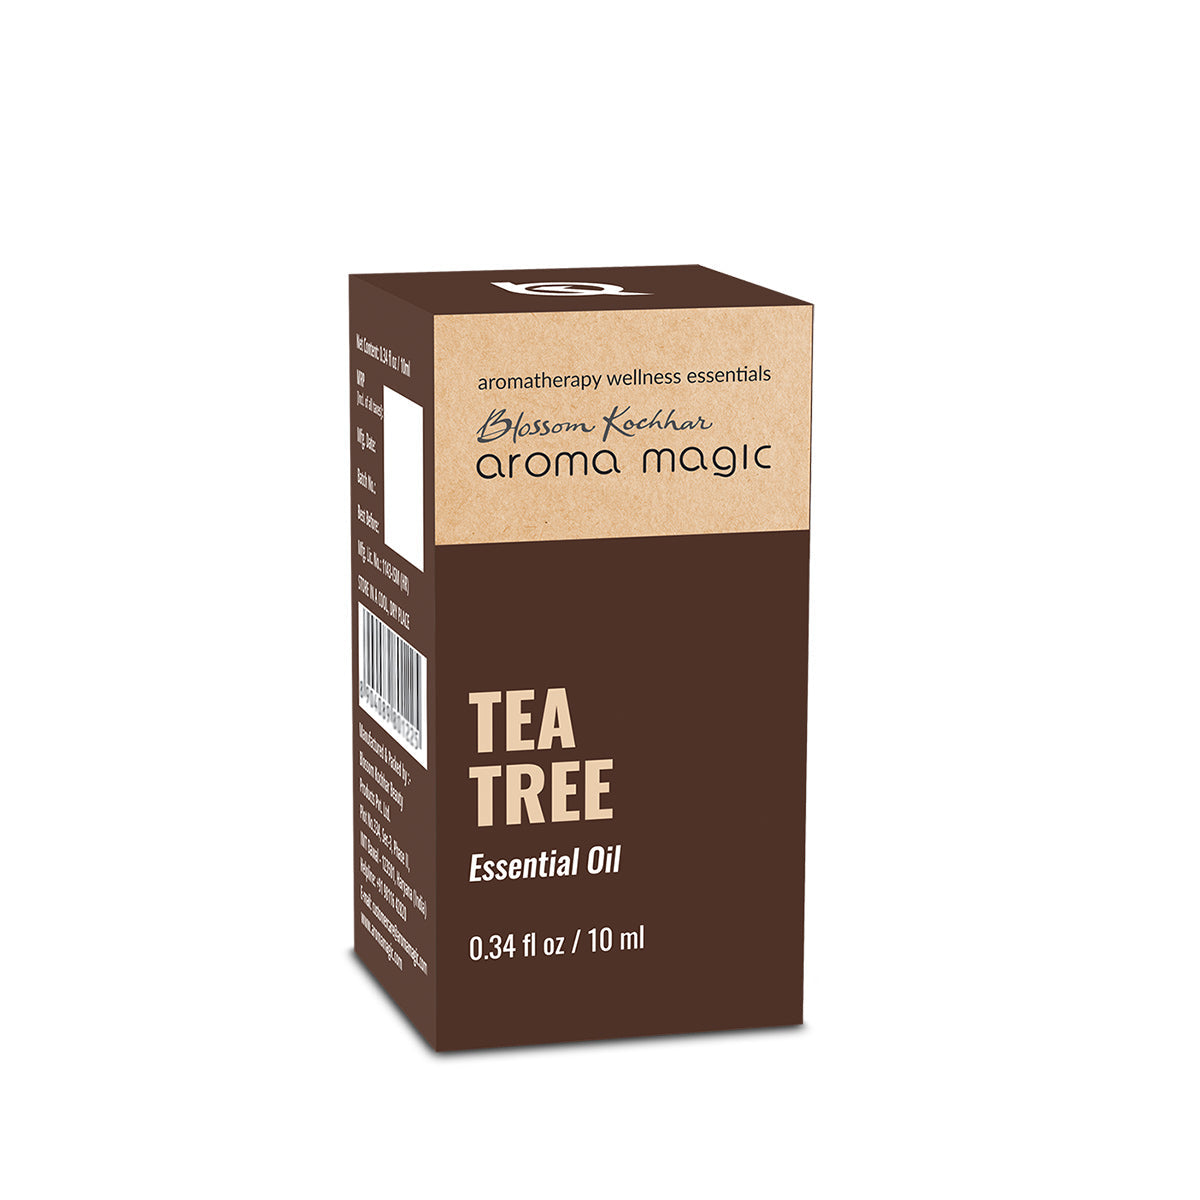 Tea Tree Essential Oil - Aroma Magic